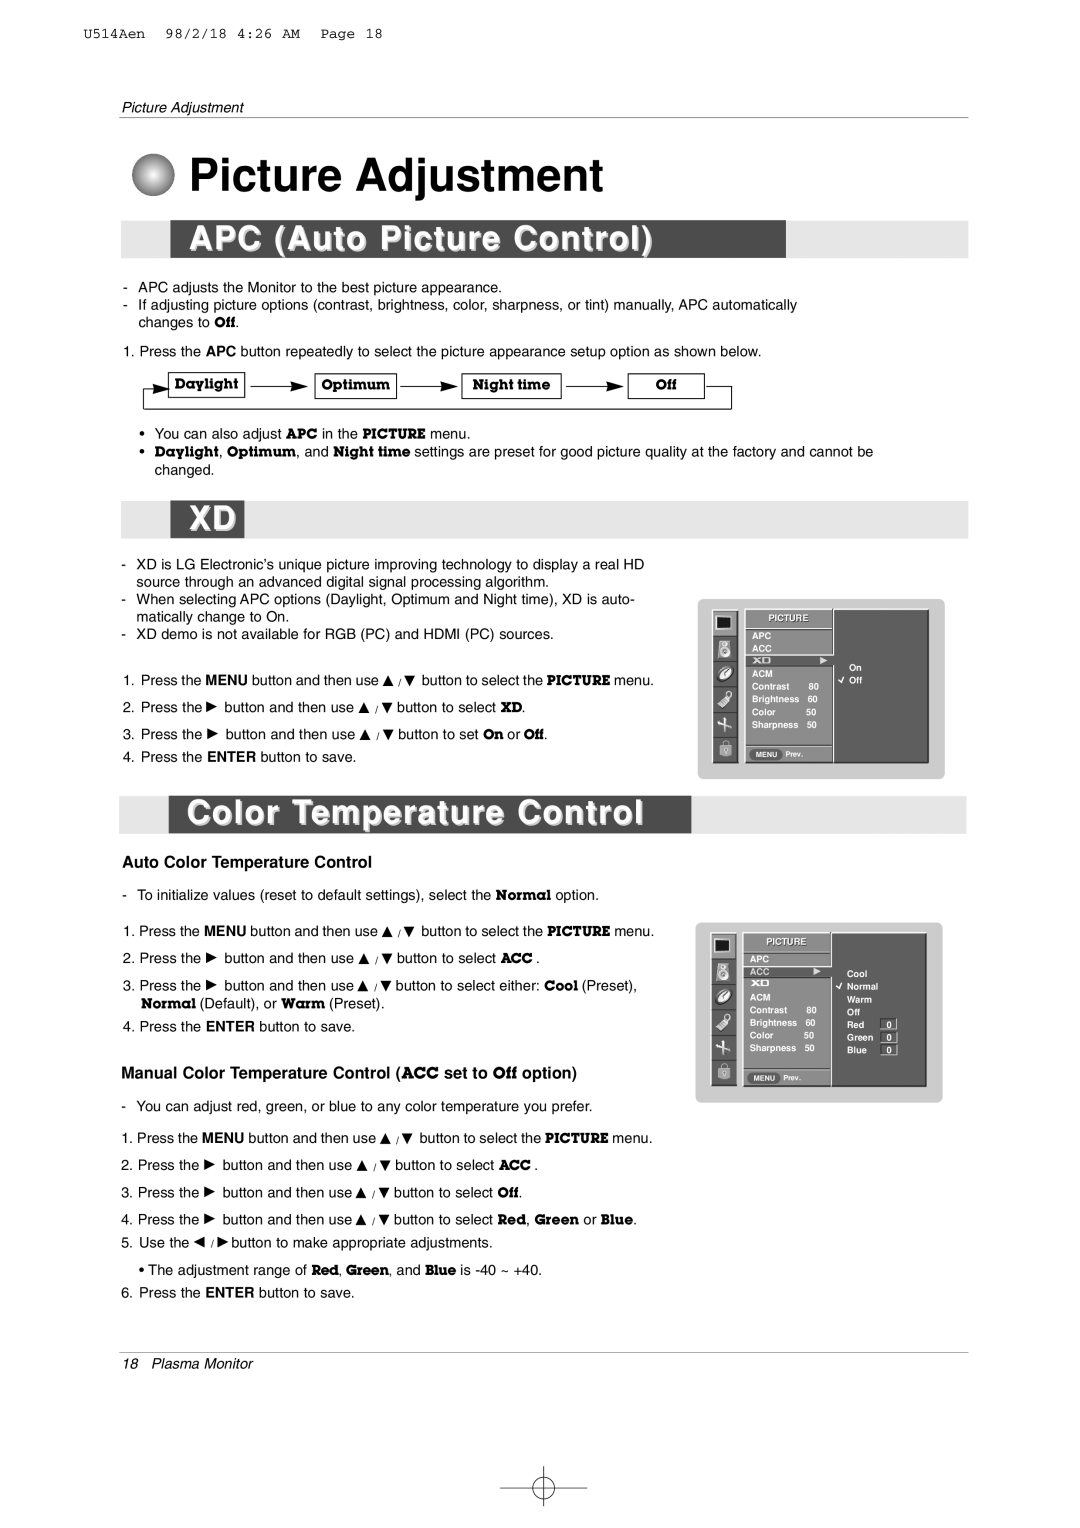 LG Electronics 42PM1M owner manual Picture Adjustment, APC Auto Picture Control, Color Temperature Control 